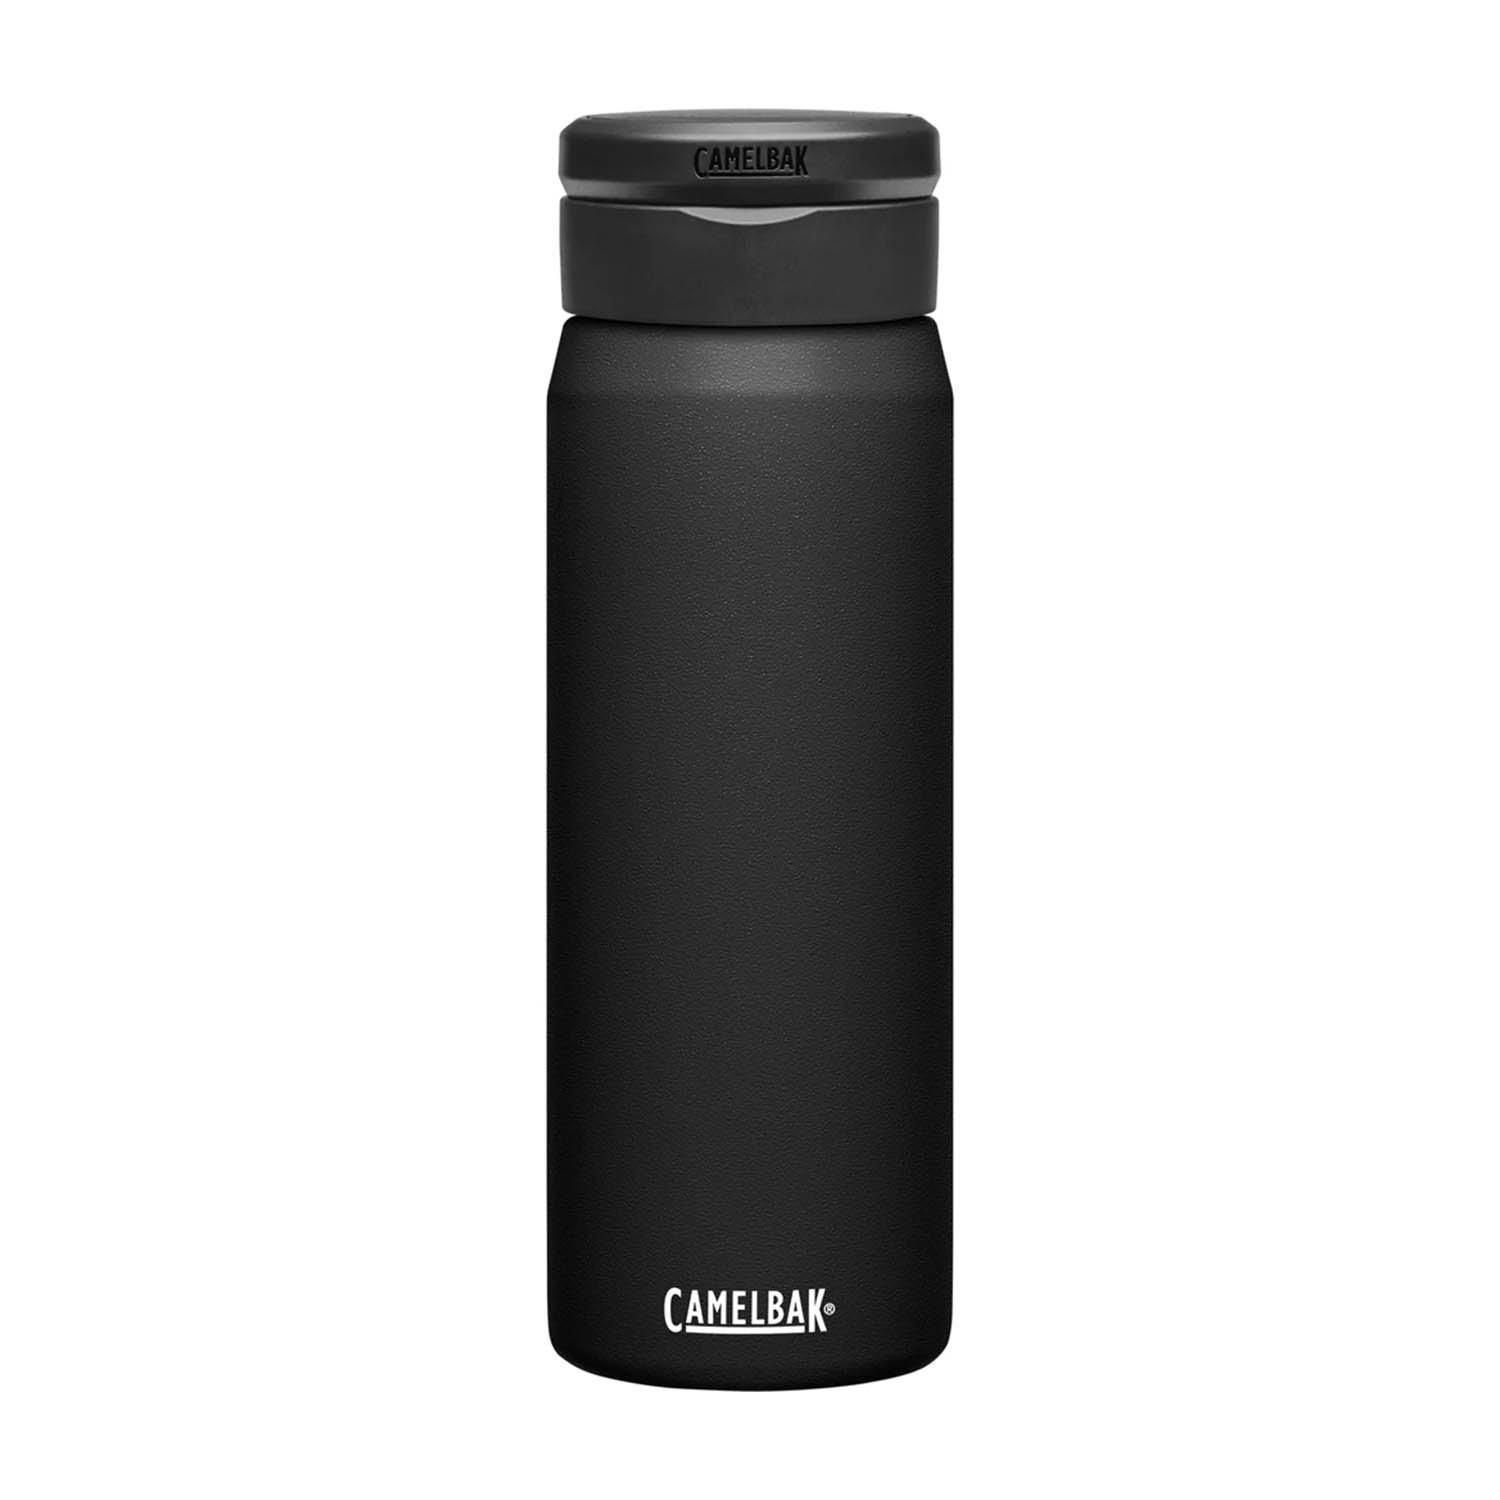 Camelbak Fit Cup 750 ml Water bottle - Black